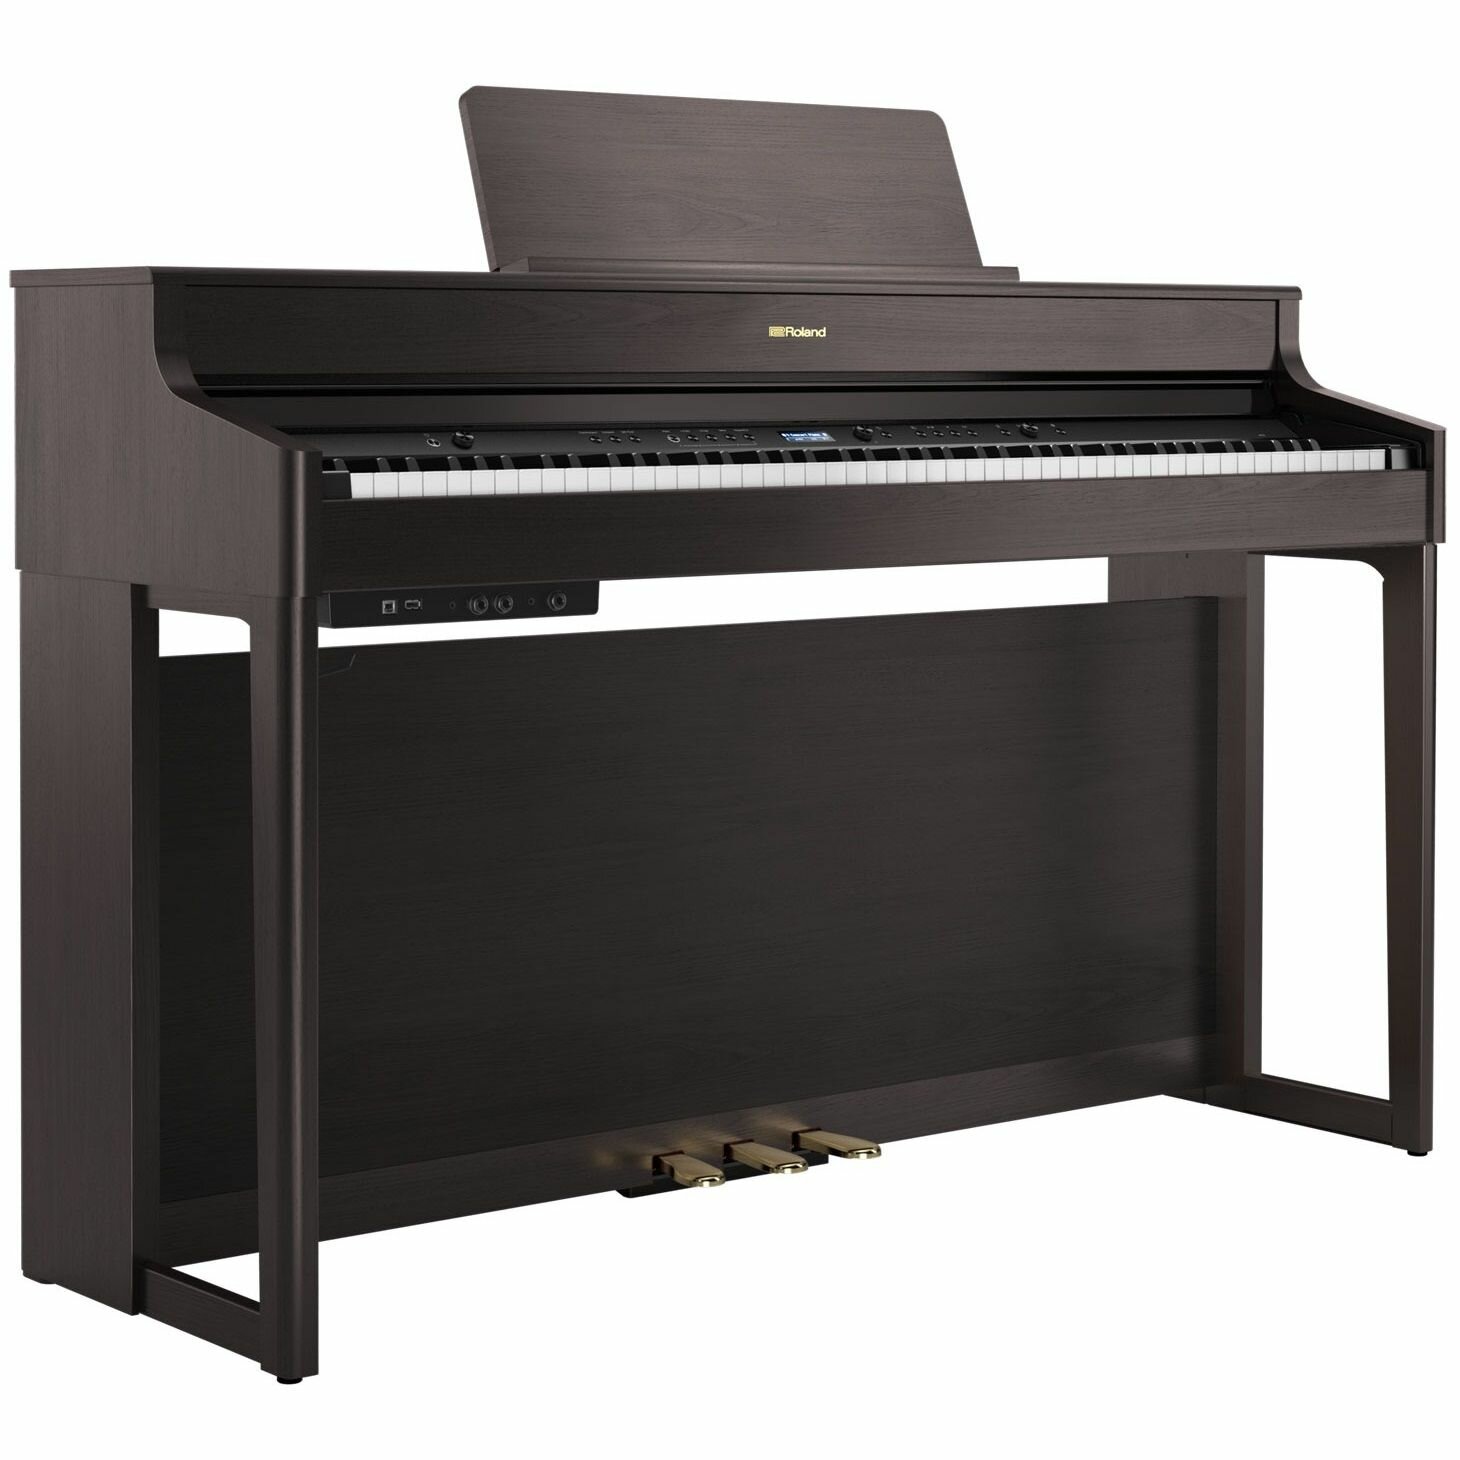 ROLAND HP702 DR SET - цифровое фортепиано цвет палисандр ( комплект).